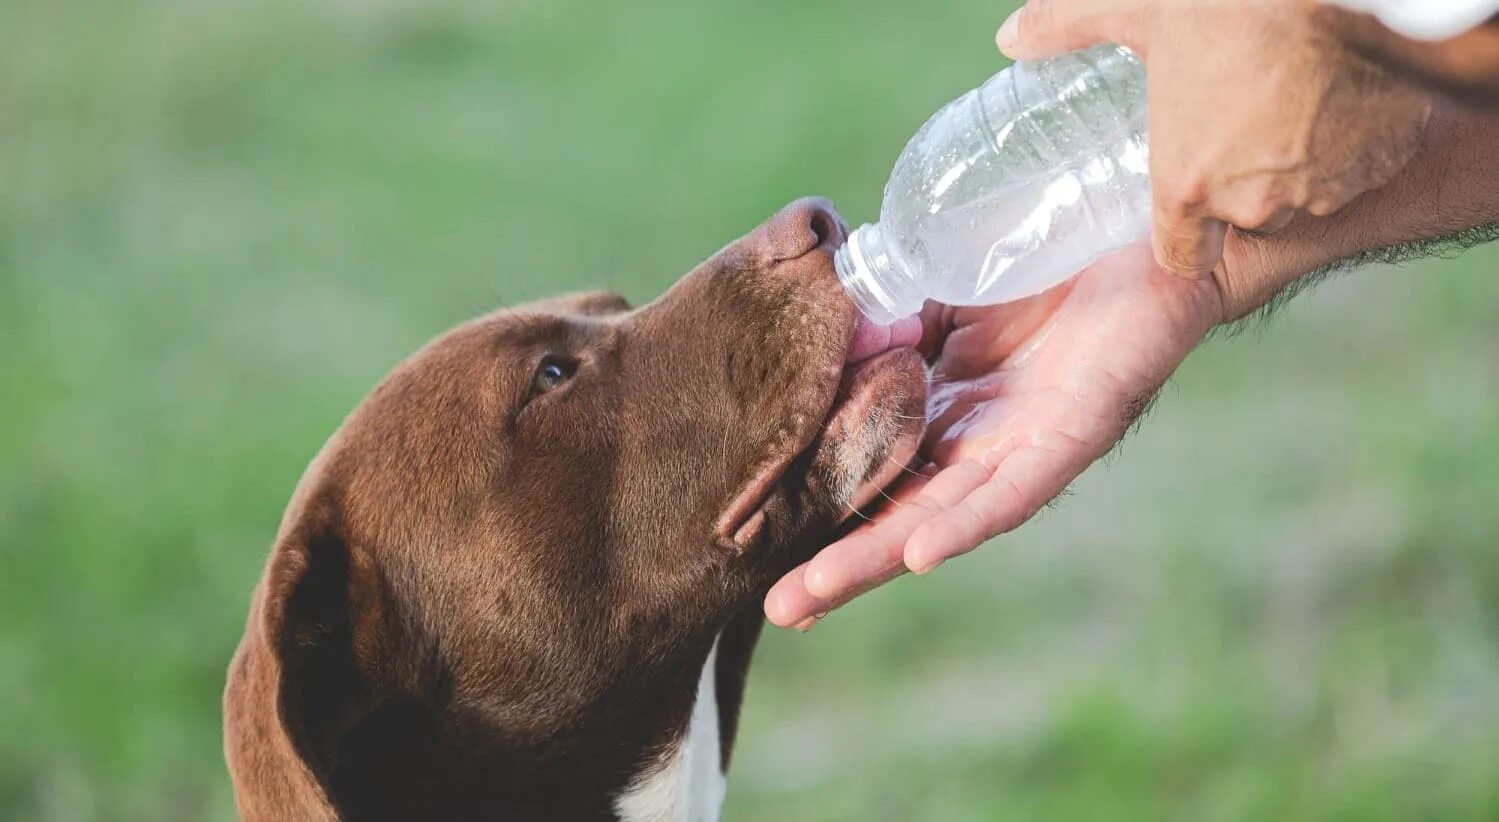 Повышенная жажда. Жажда у животных. Выпит собака. Собака пьет воду. Жажда у собаки.